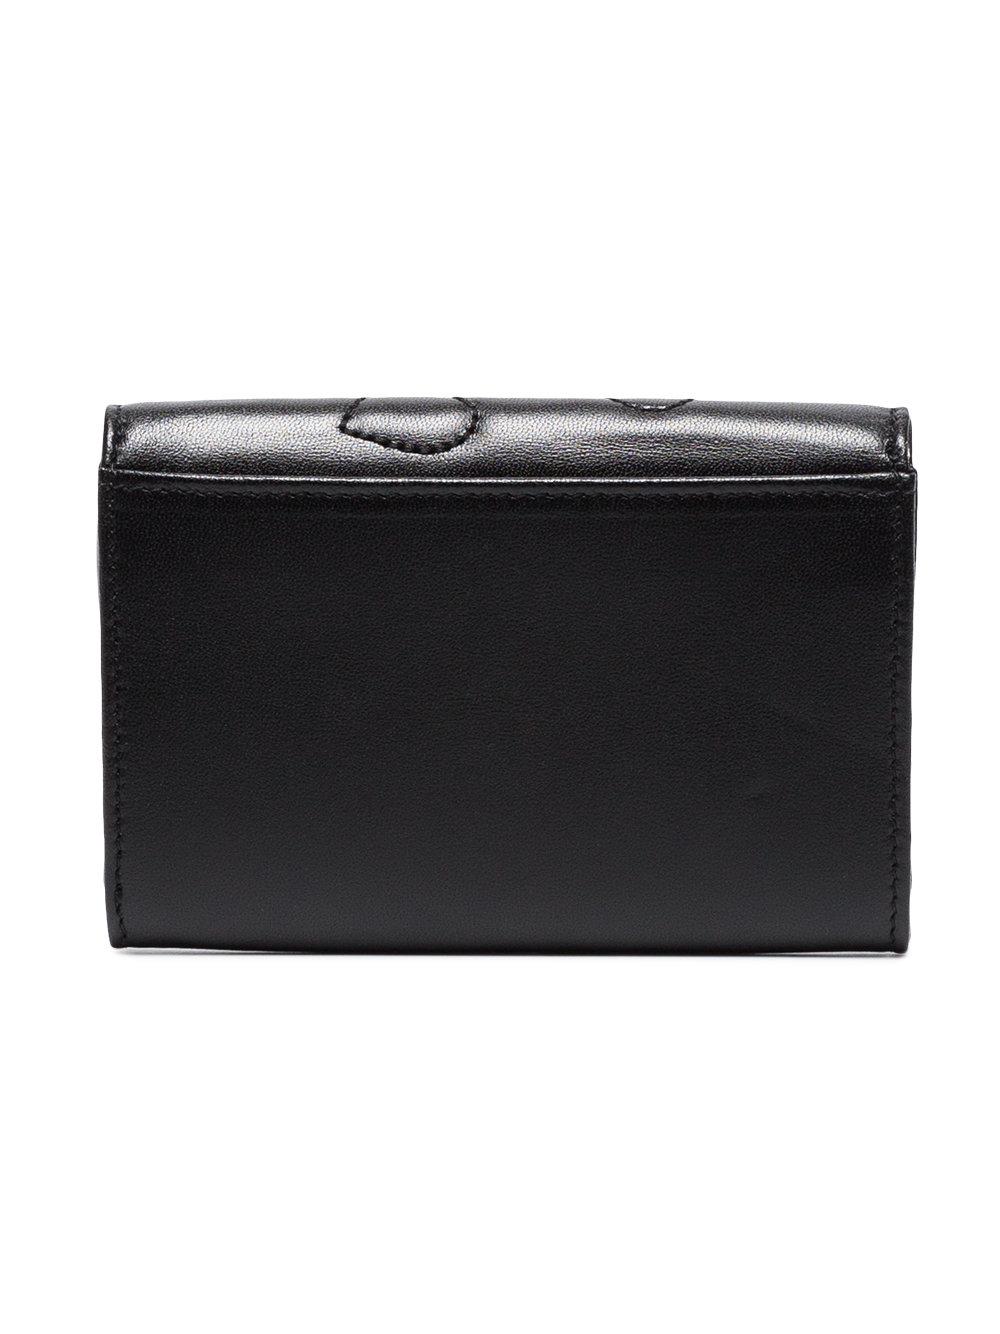 Leather wallet Saint Laurent Black in Leather - 30940271